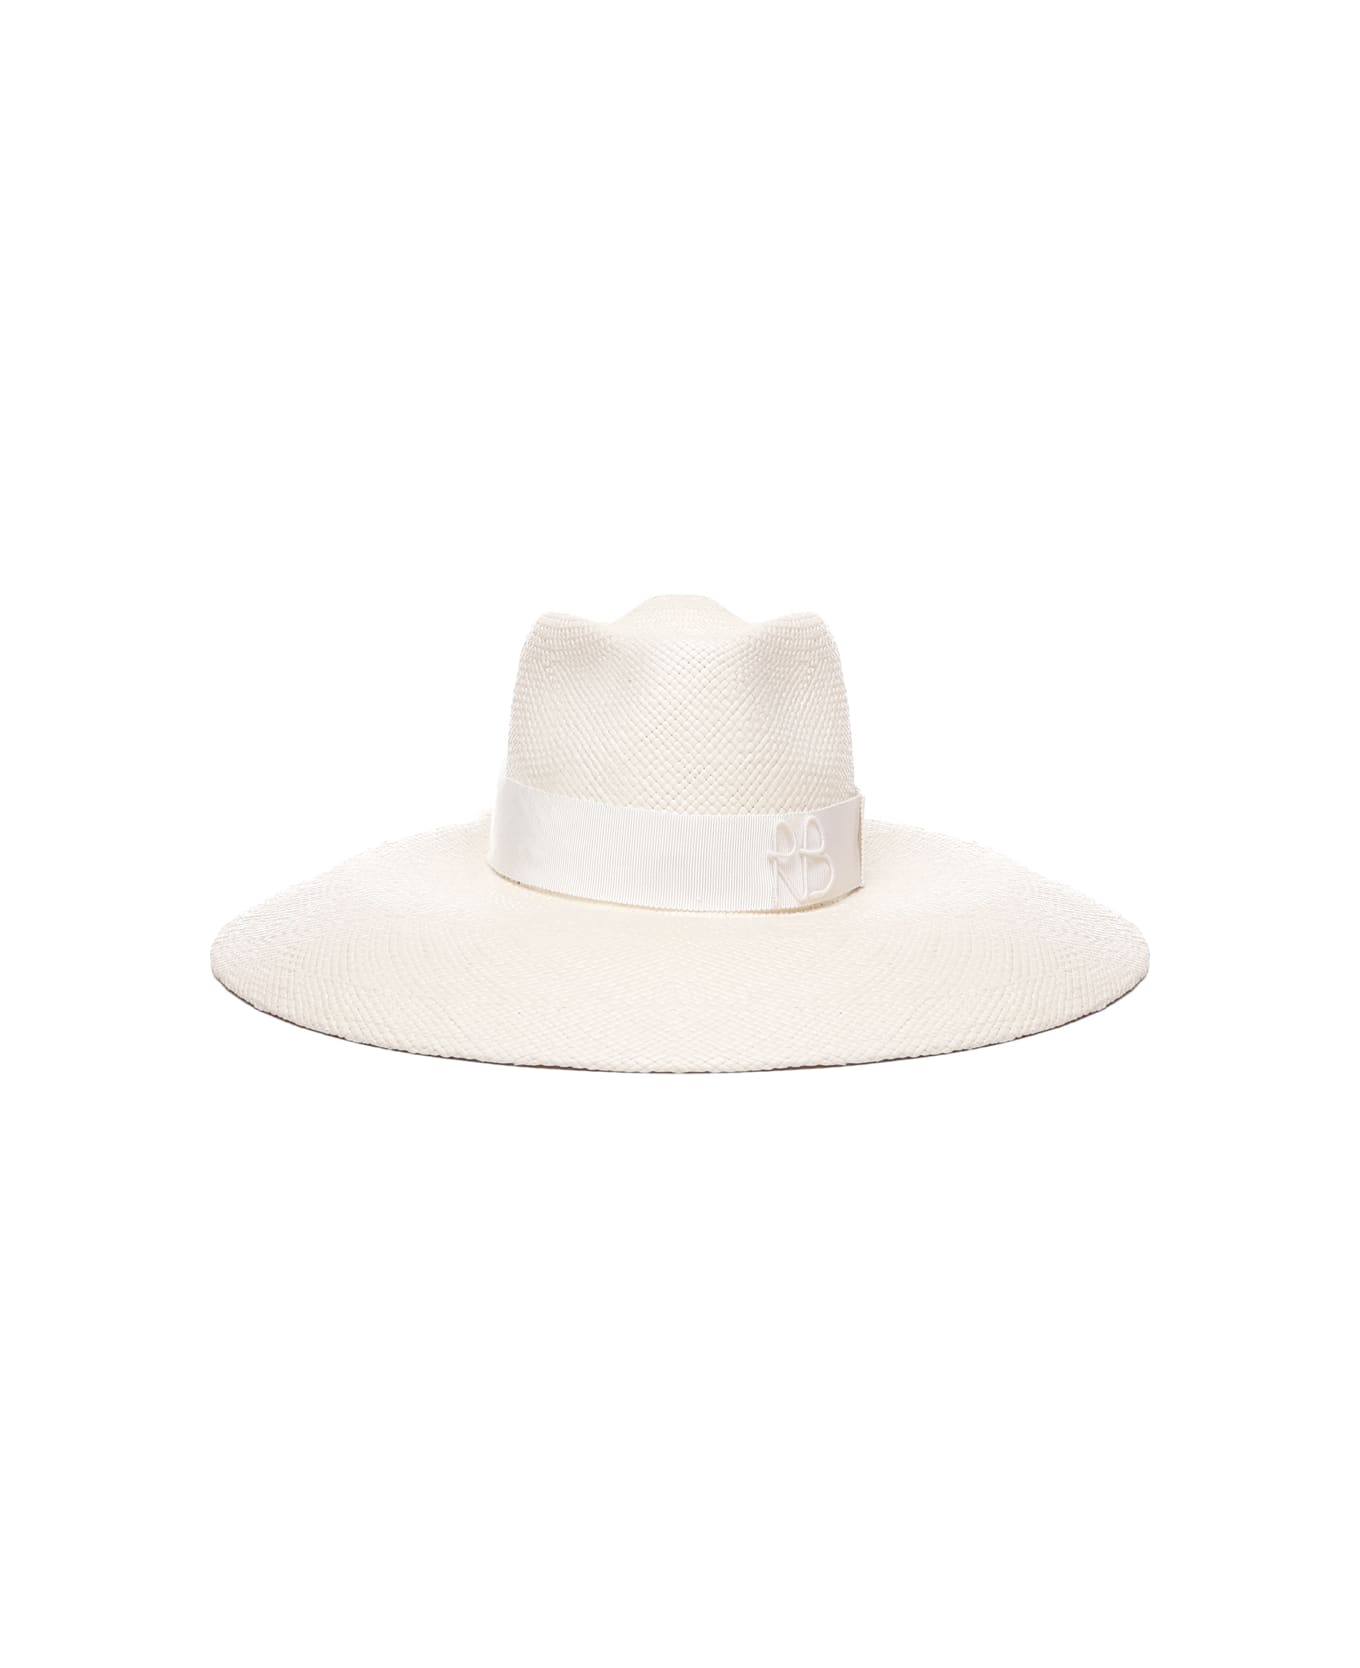 Ruslan Baginskiy Wide Brim Fedora Hat Embellished With Monogram - White